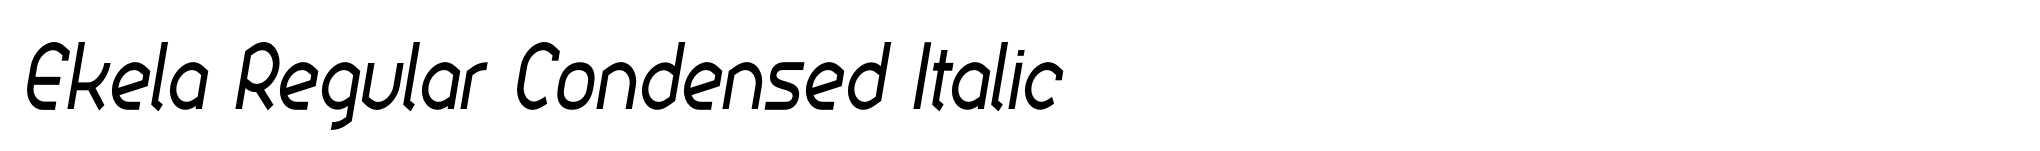 Ekela Regular Condensed Italic image